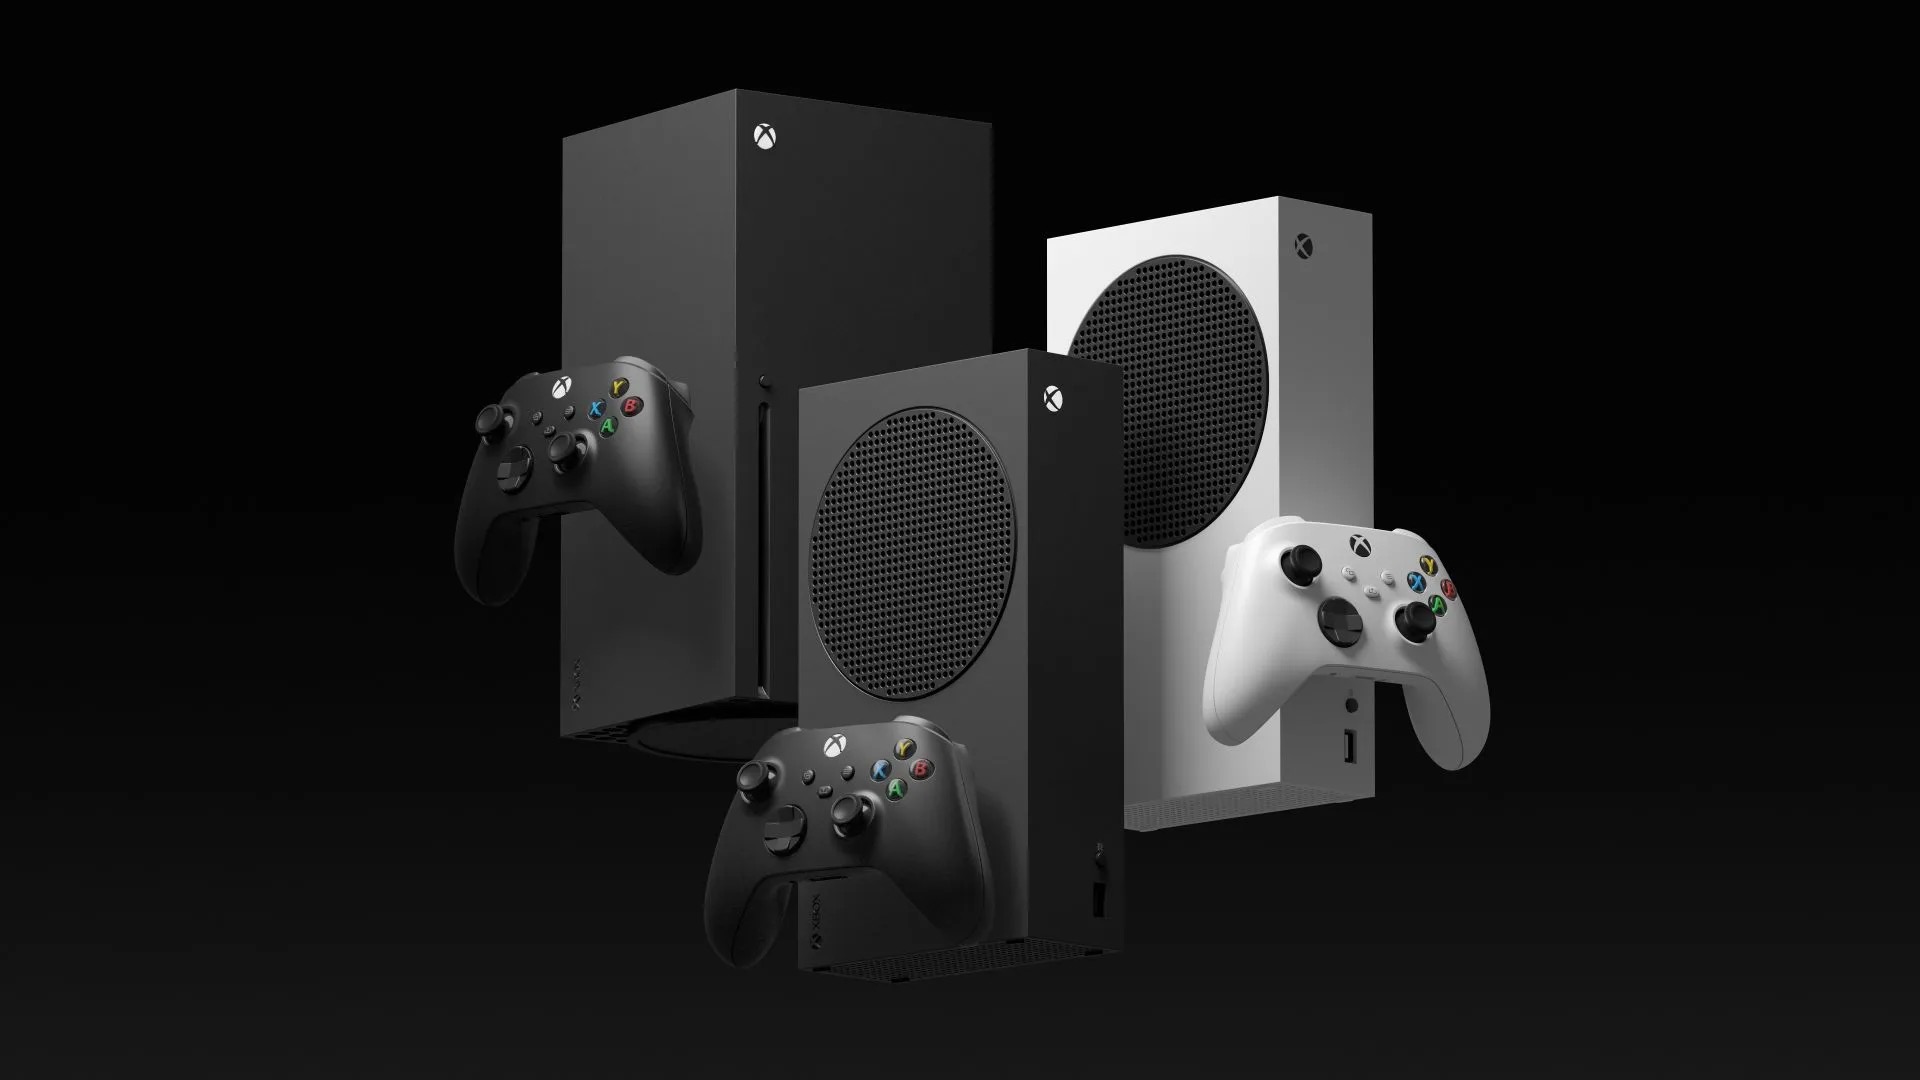 Прошивка Xbox Series X | S, которая решит проблему с сейвами в Baldur’s Gate 3, выйдет 16 января: с сайта NEWXBOXONE.RU